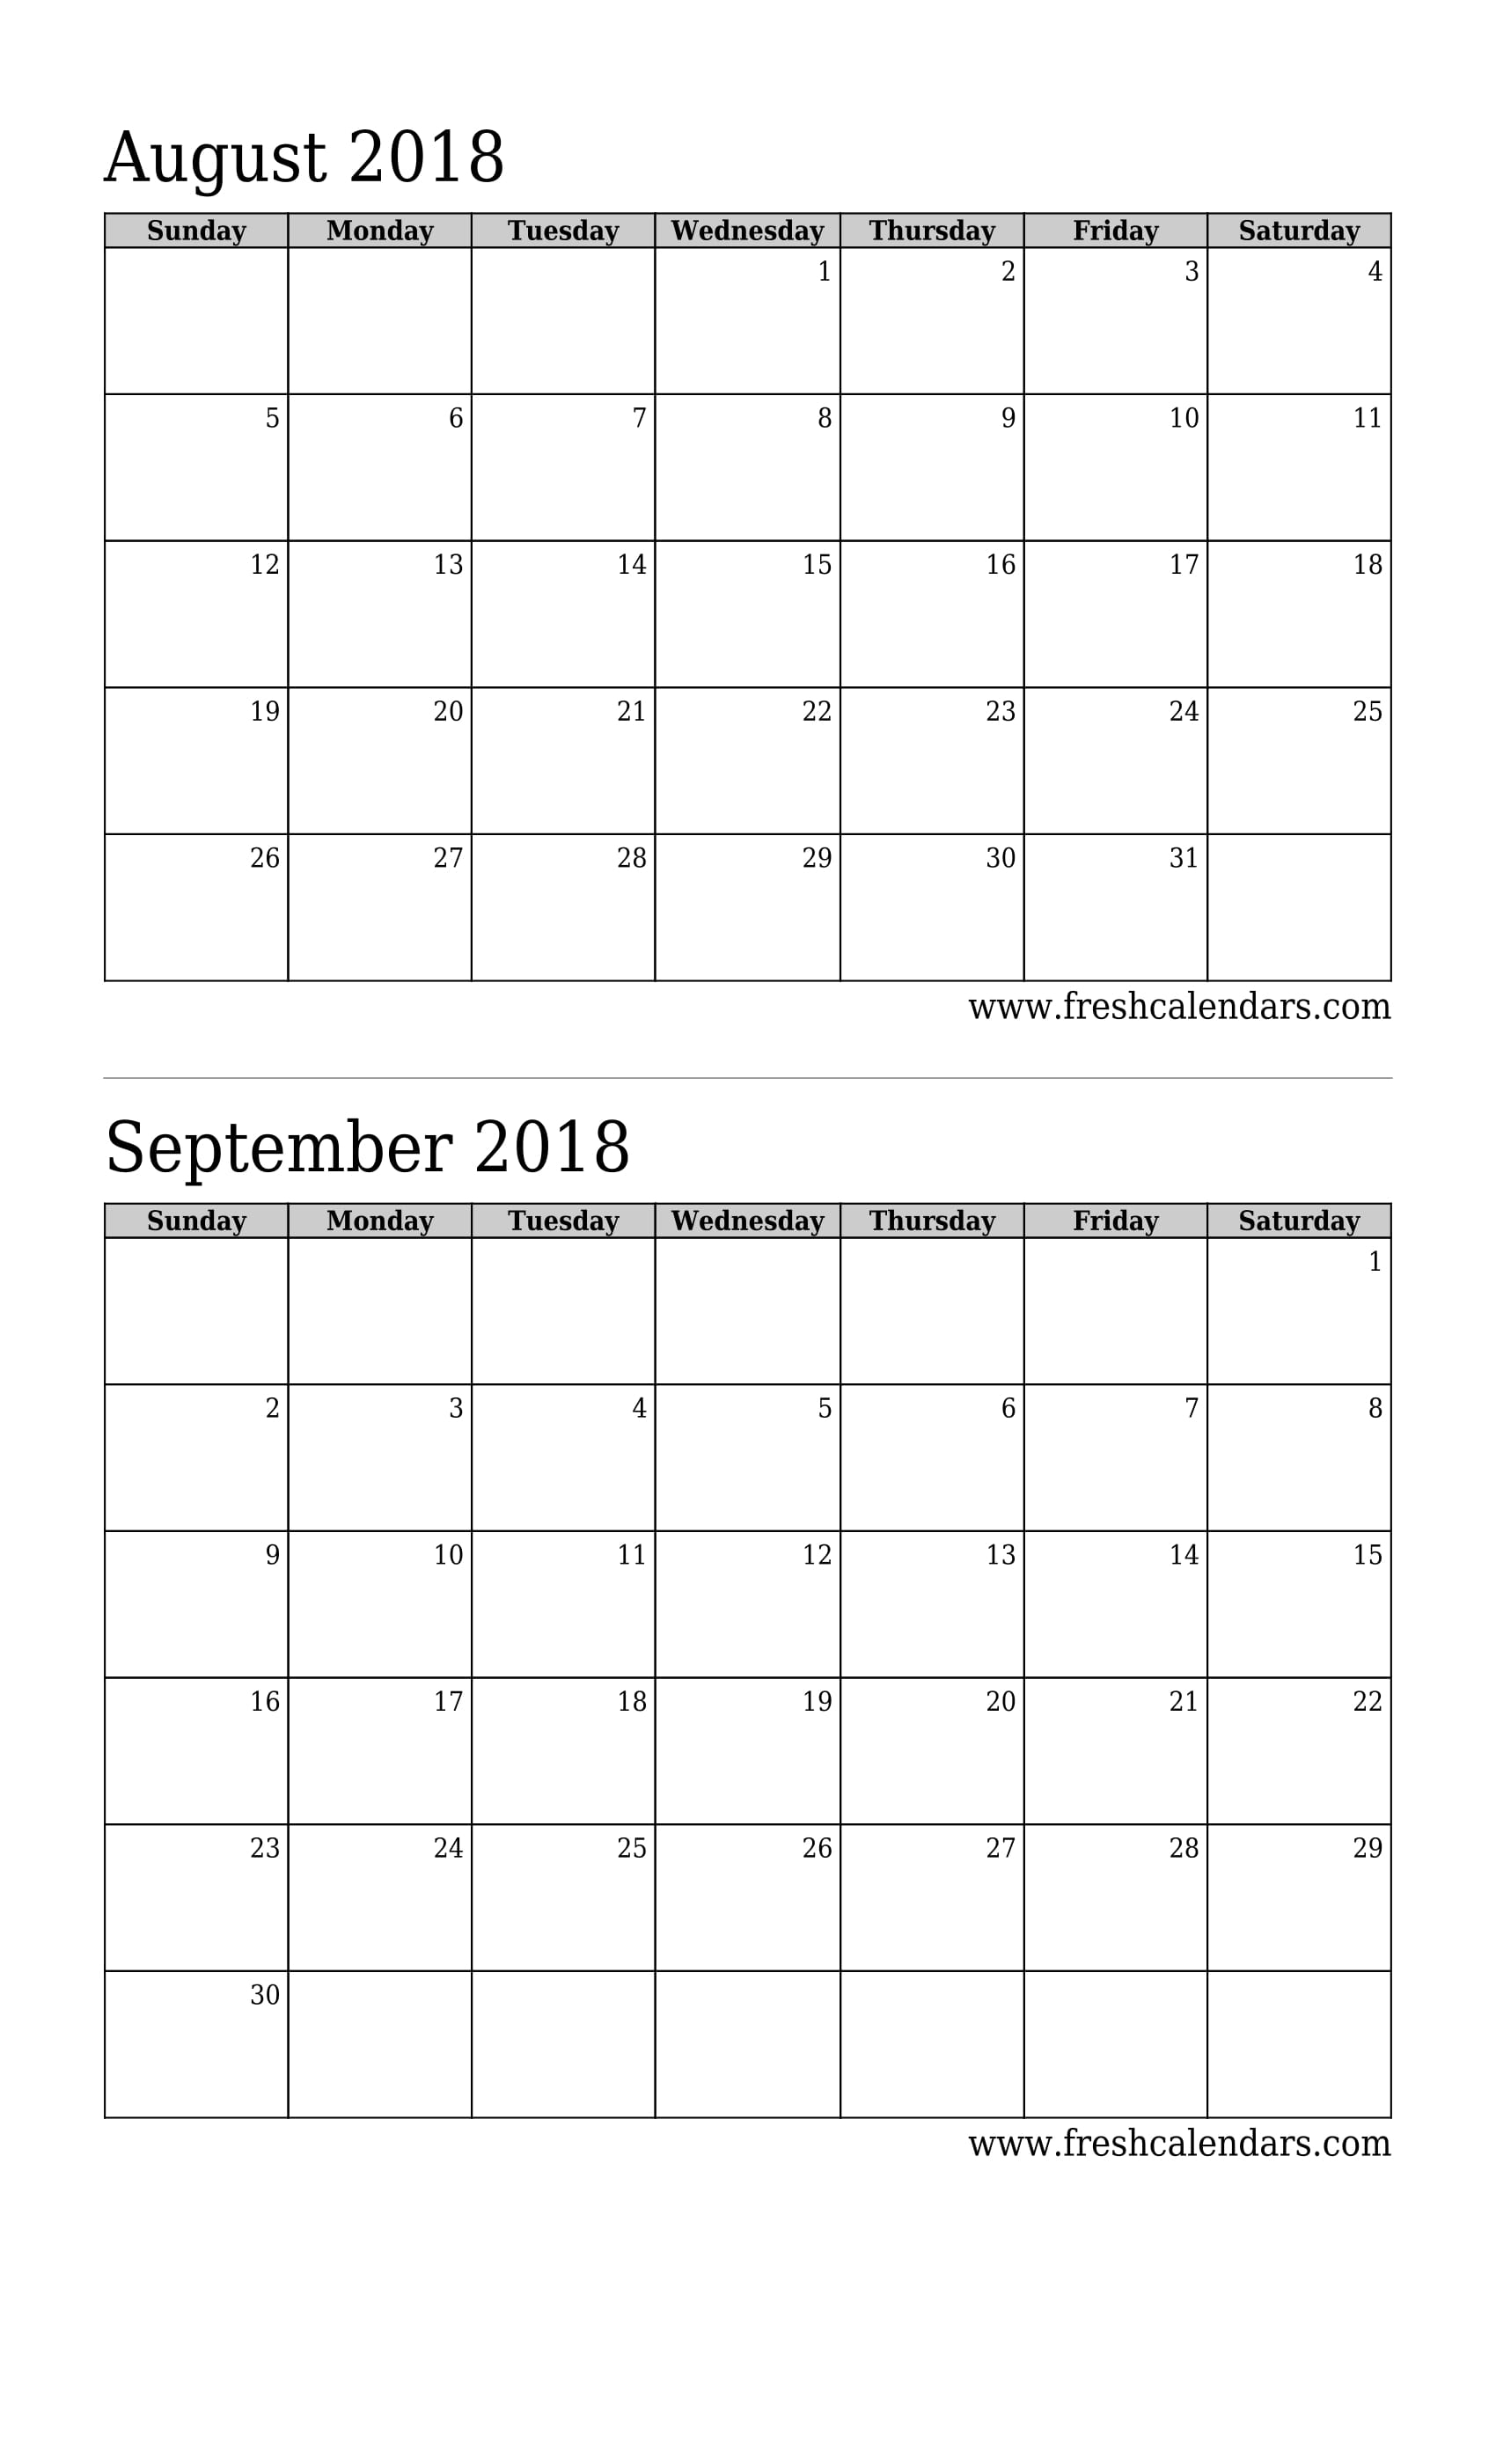 August 2018 Calendar Printable - Fresh Calendars throughout August Calendar Printable 2 Month On One Page